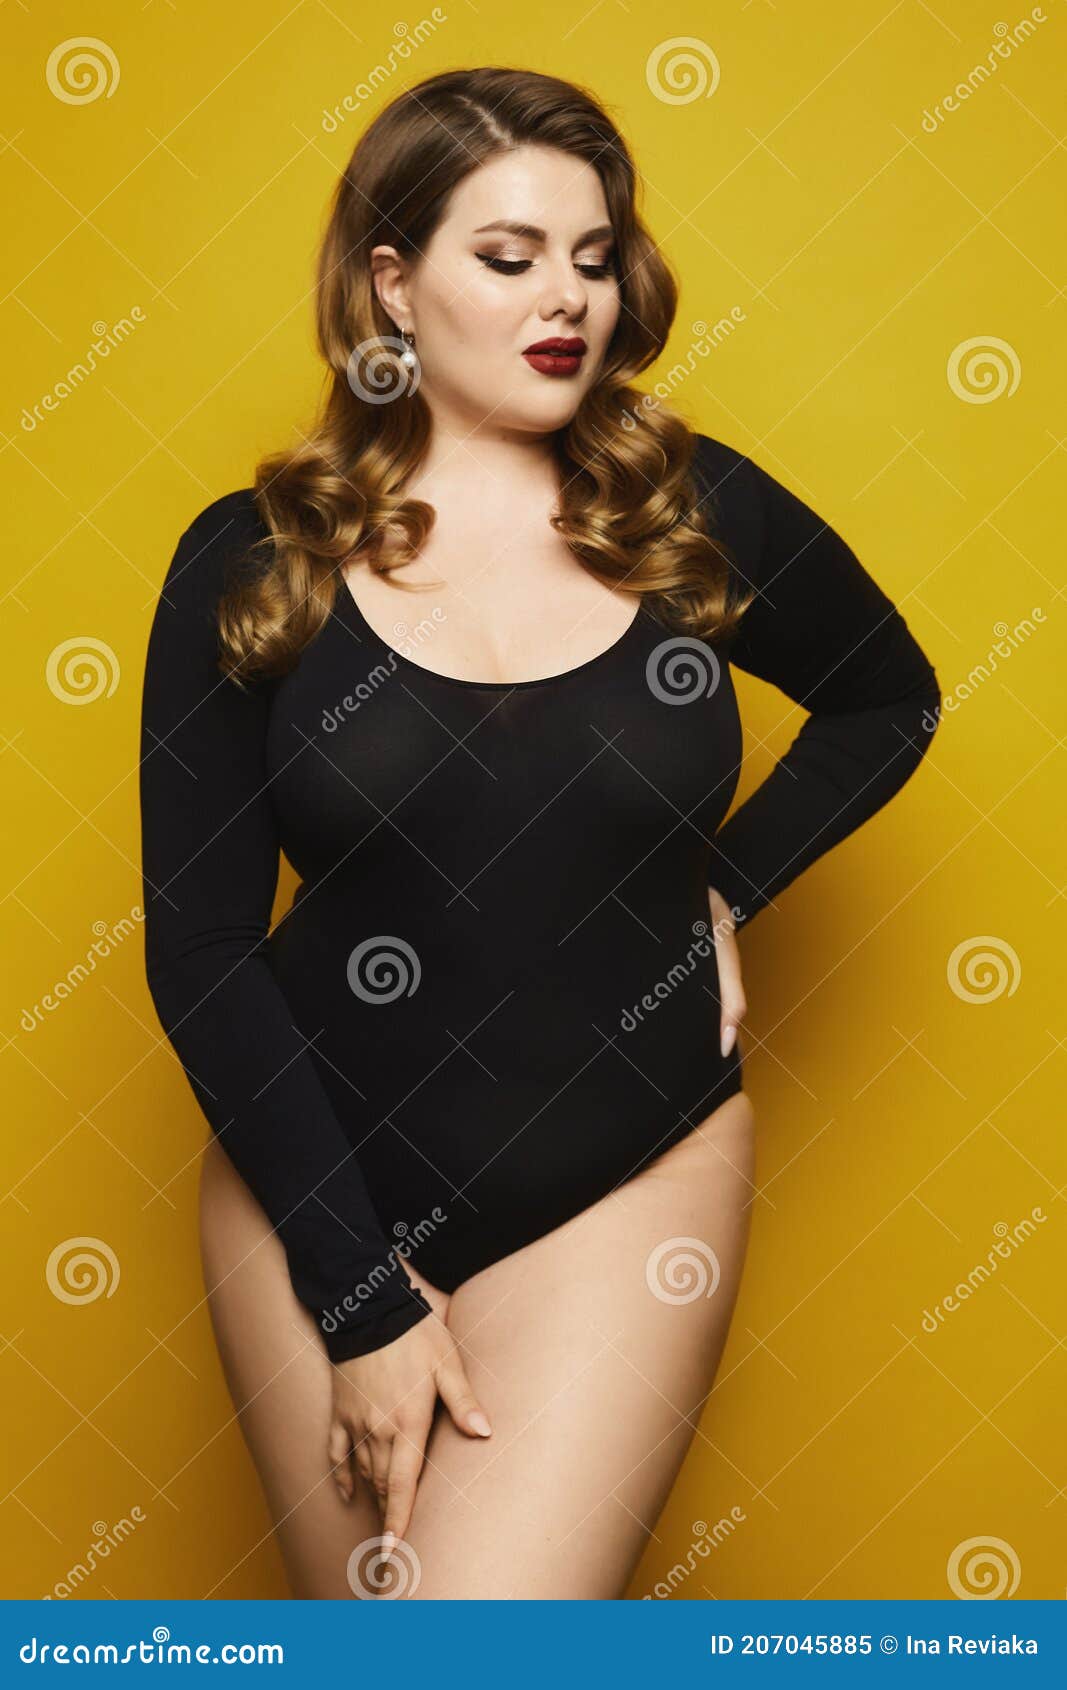 Plump Woman in Black Bodysuit Posing Over Yellow Background. Plus